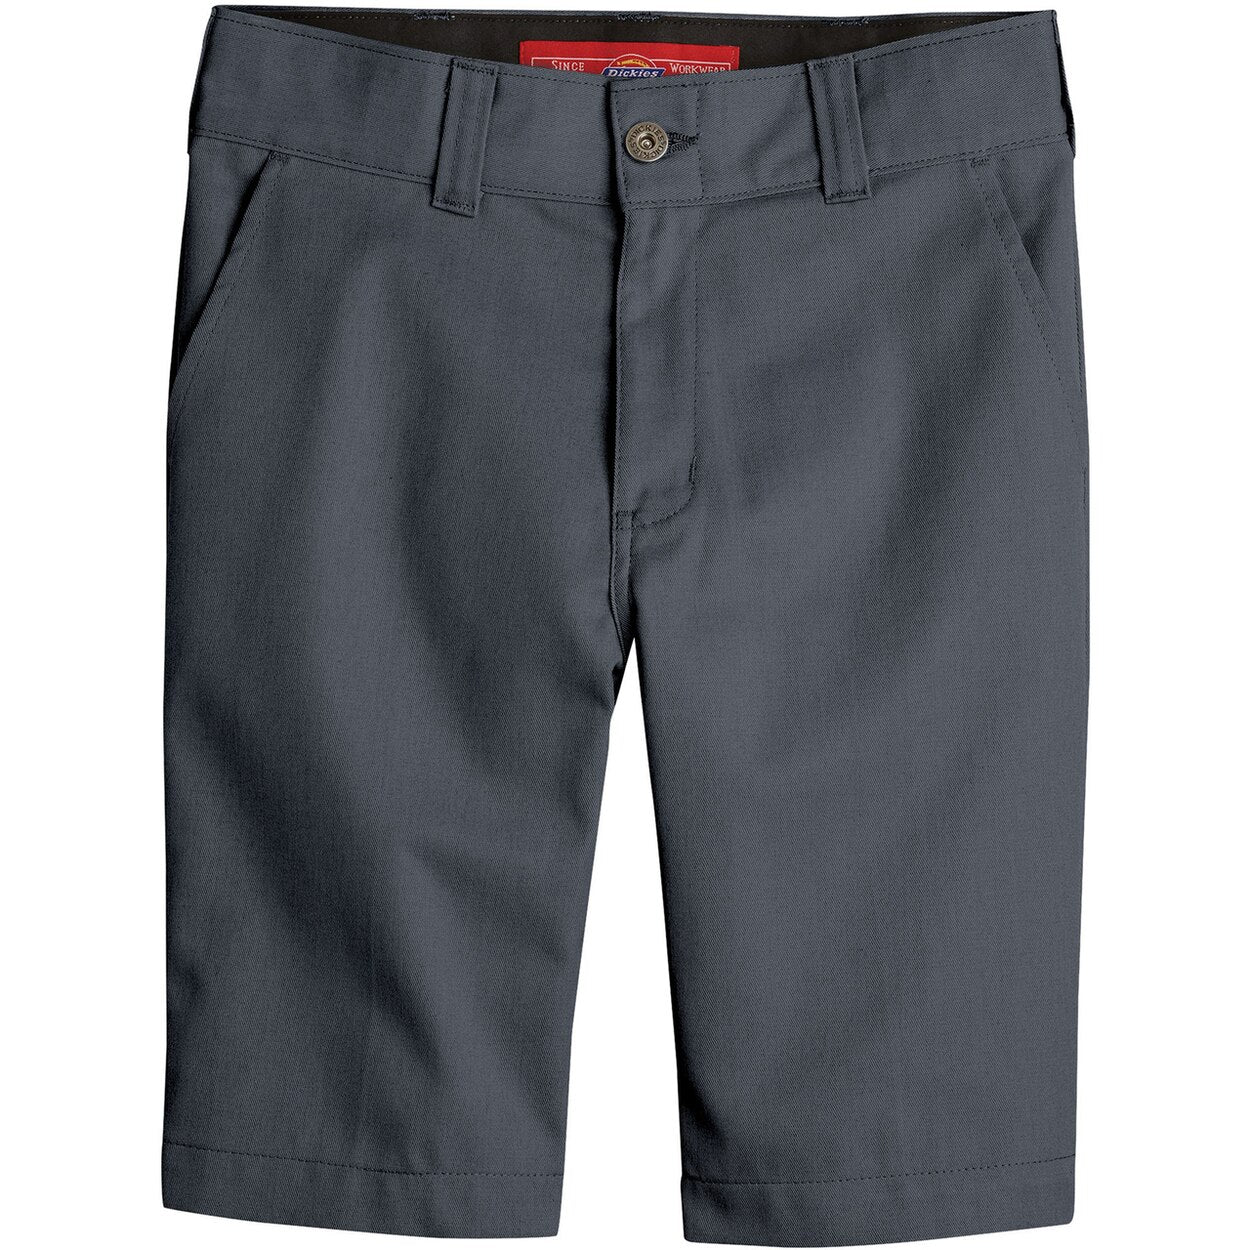 Dickies 67' Boys Slim Fit Flex Shorts - Charcoal